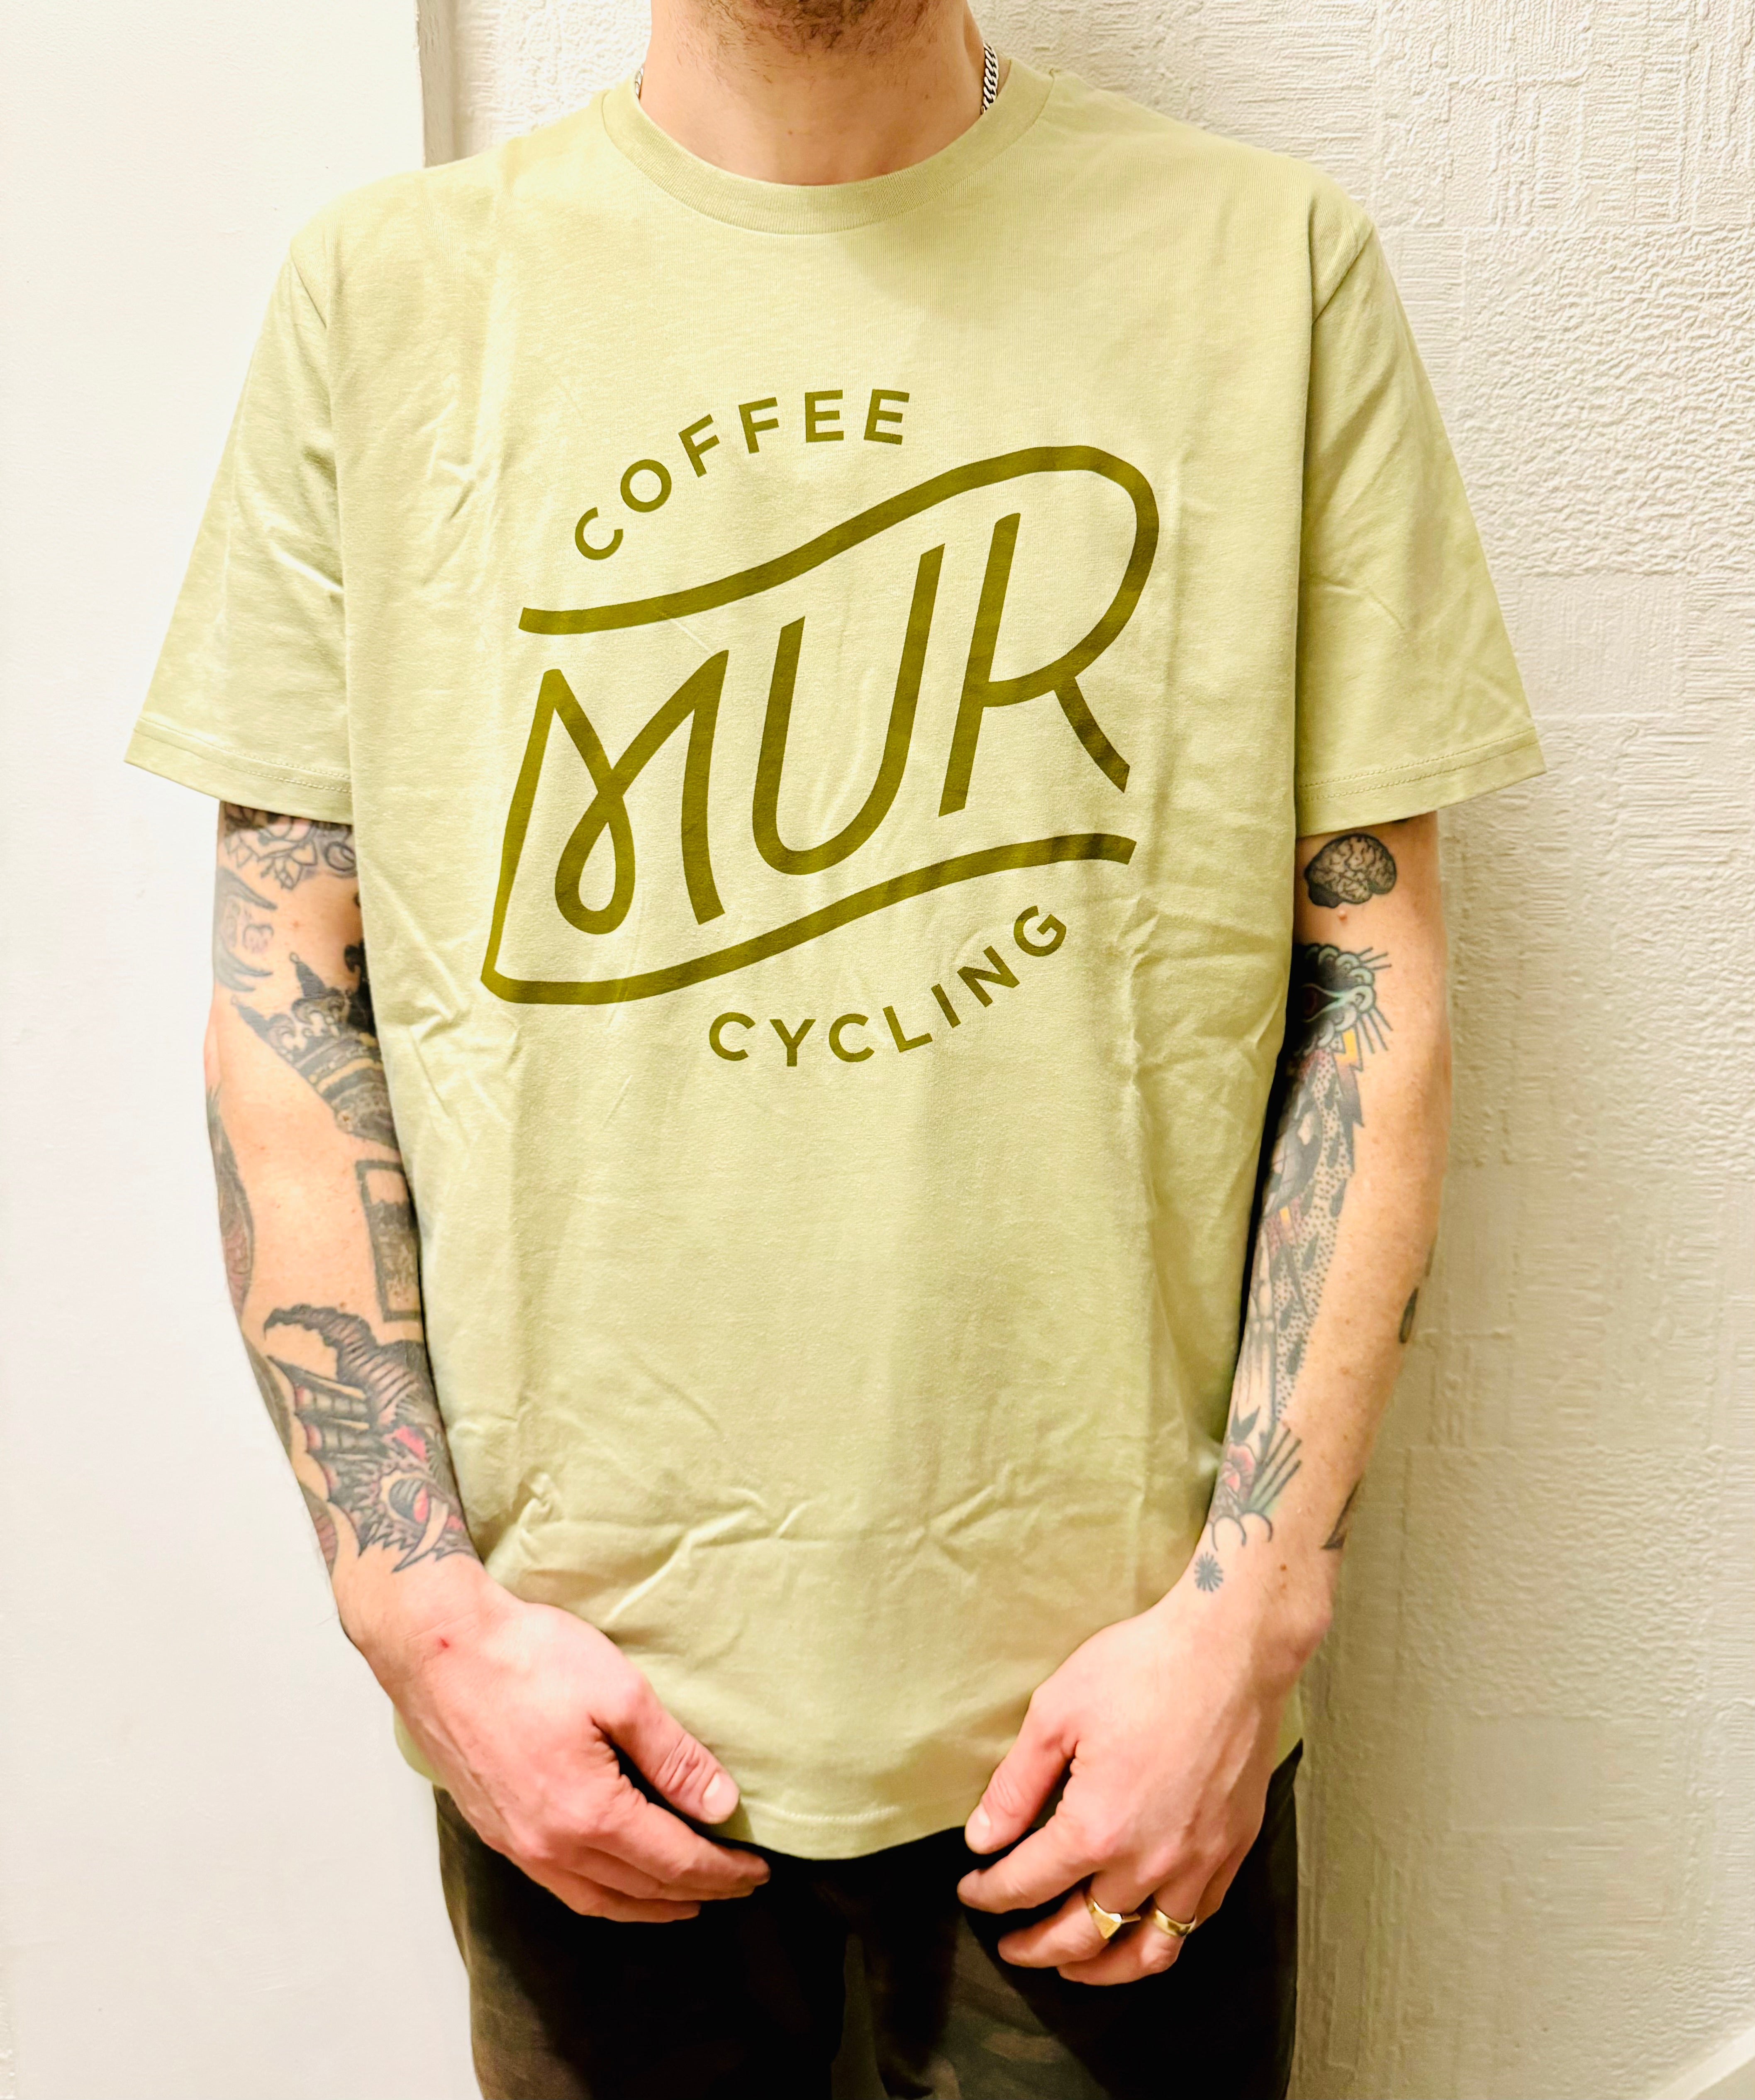 Mur Coffee and Cycling T-shirt